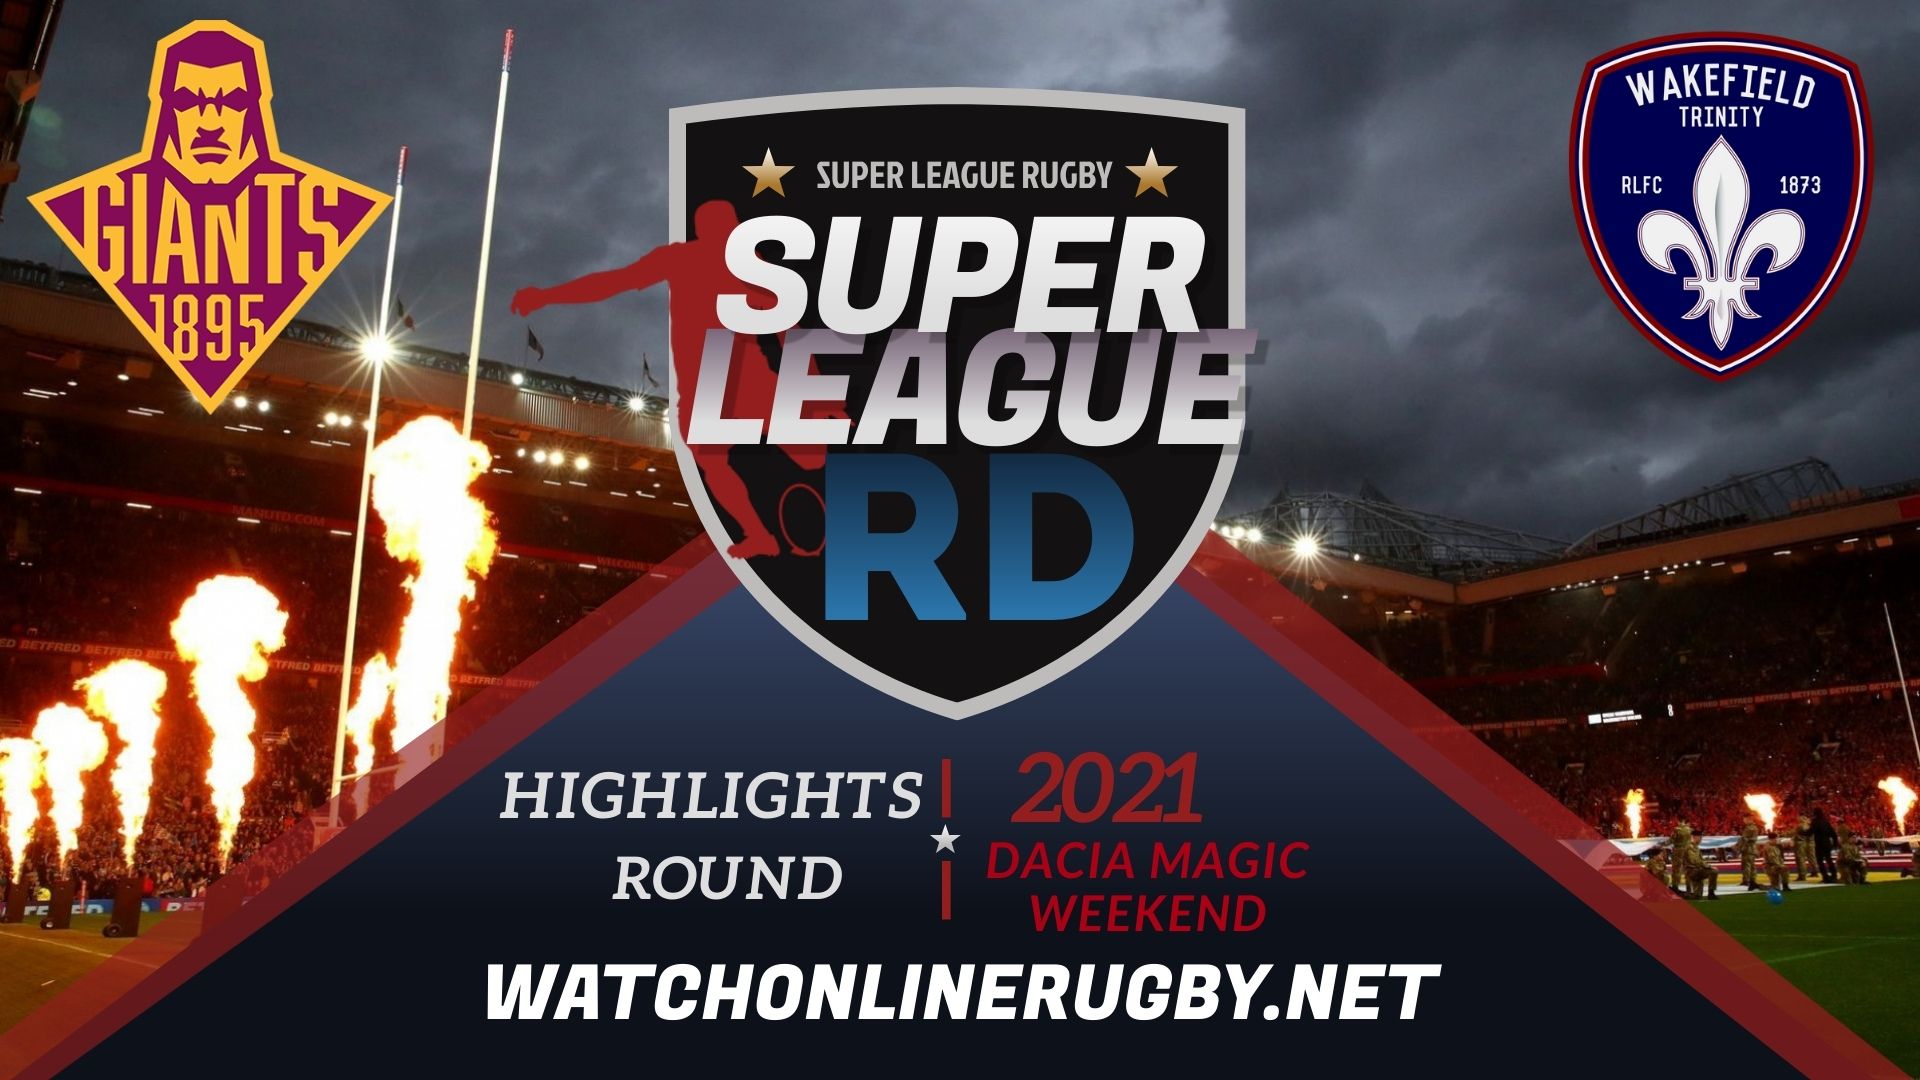 Huddersfield Giants Vs Wakefield Trinity Super League Rugby 2021 RD Dacia Magic Weekend